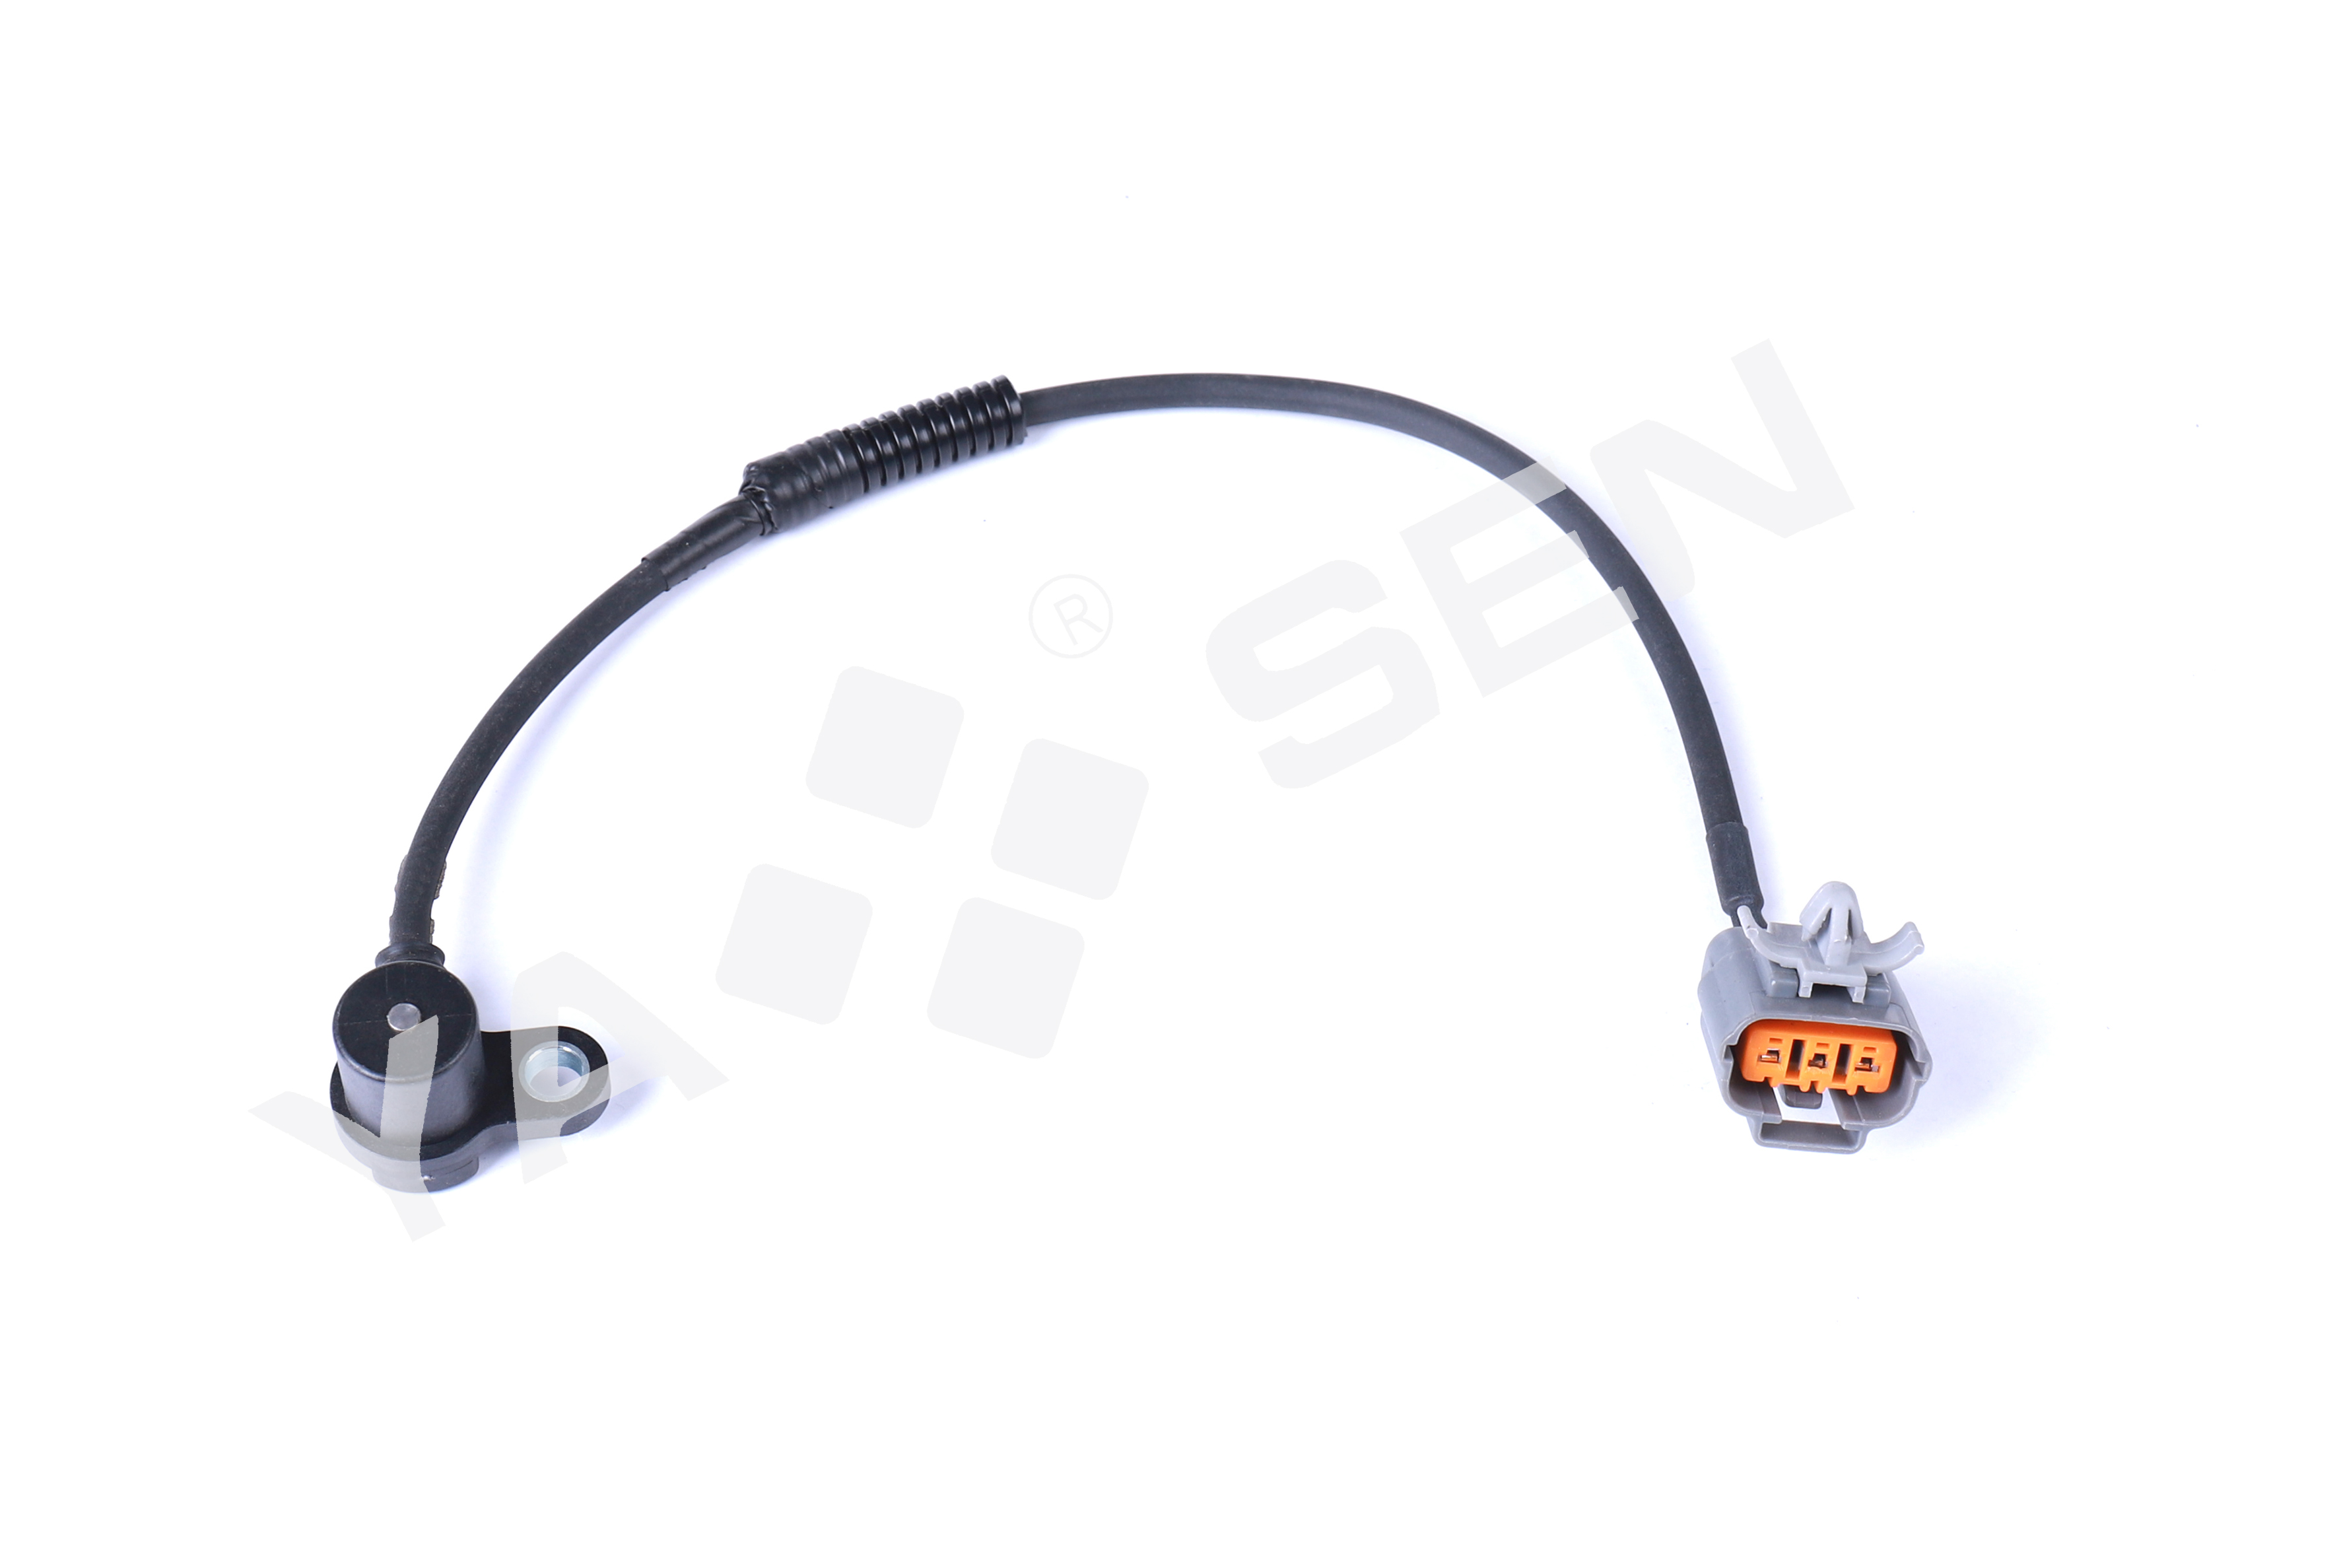 High Quality for Chevrolet Throttle Position Sensor - Crankshaft Position Sensor for MAZDA, 2131983 5S1824 CSS830 1800437 715004 SS10161 CSS9034 190466 BPS118221 PC221 SU – YASEN